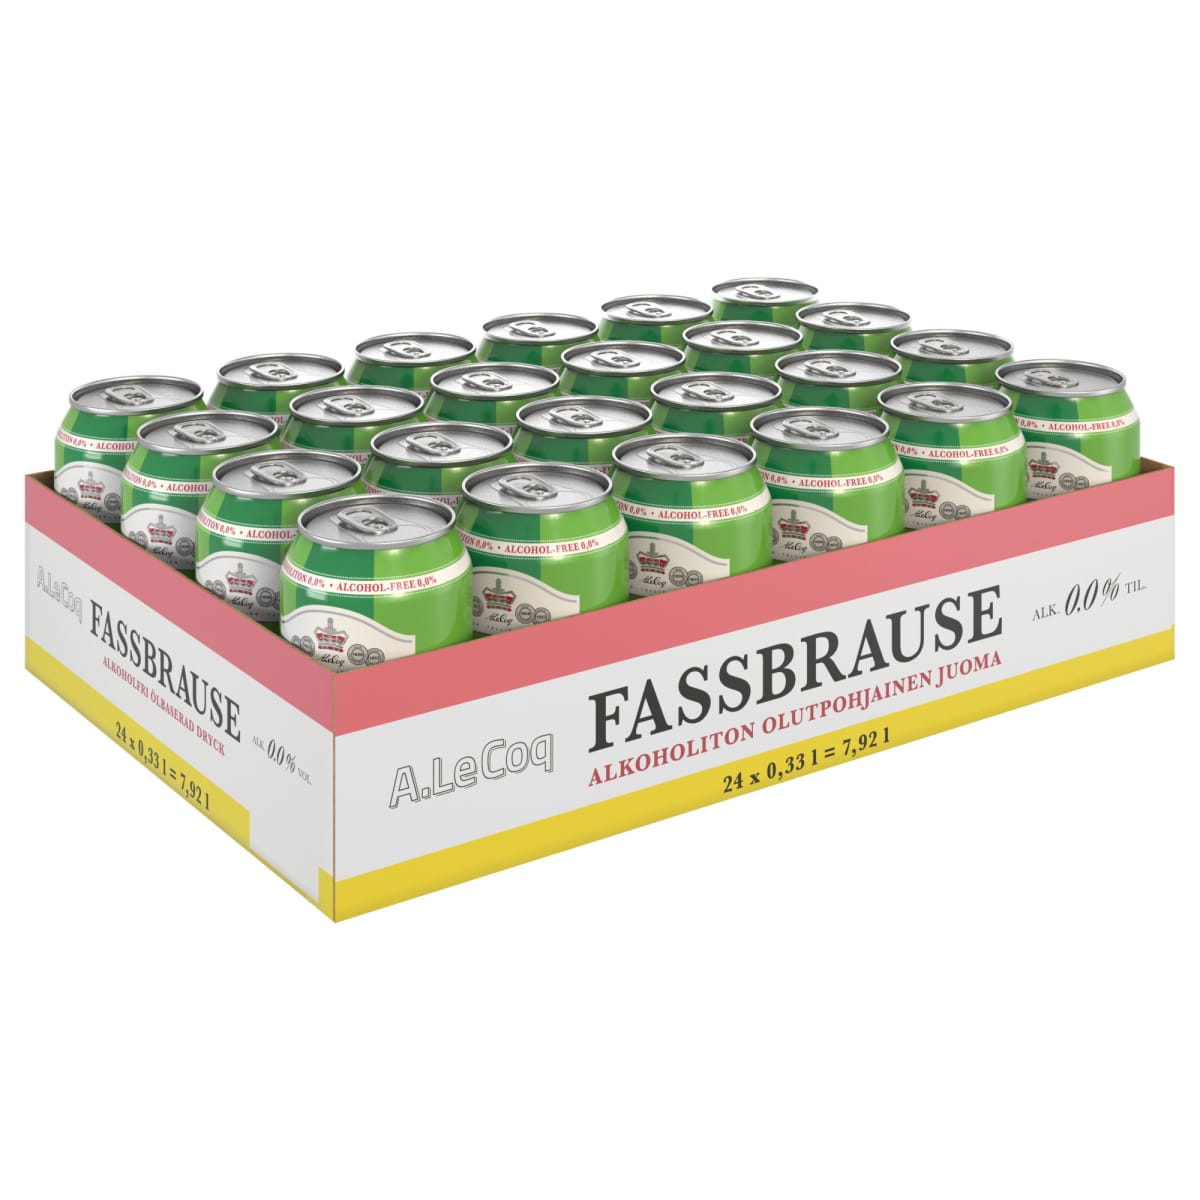 A. Le Coq Fassbrause Mojito 24x0,33l alkoholiton olut   verkkokauppa